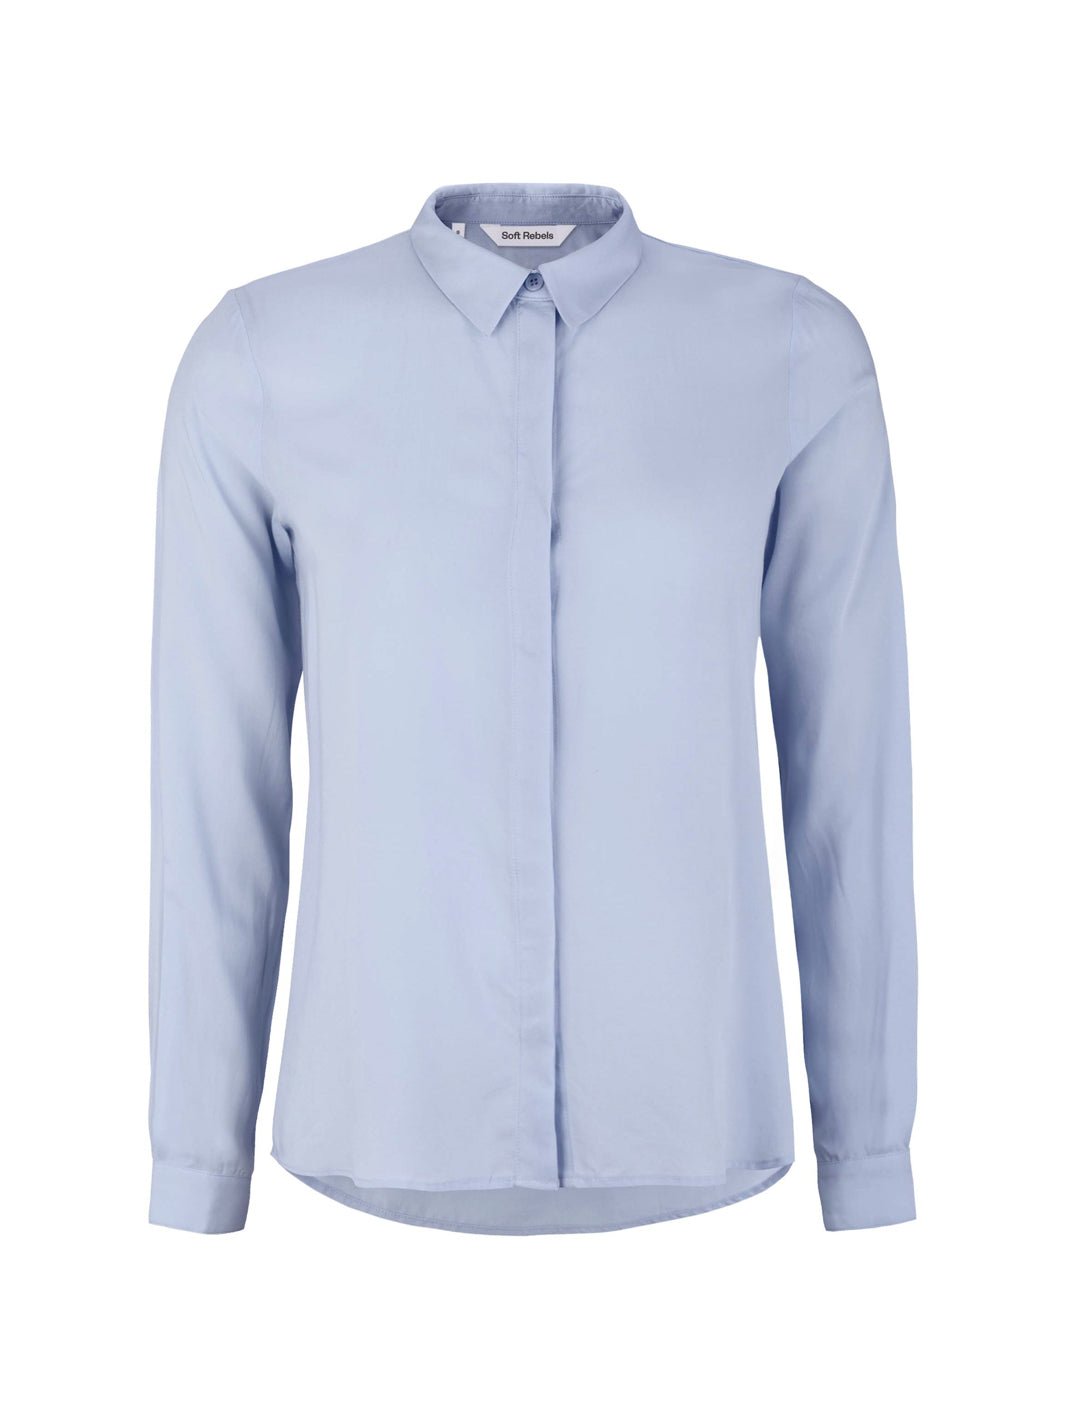 Soft Rebels SRFreedom LS shirt cashmere blue - Online-Mode